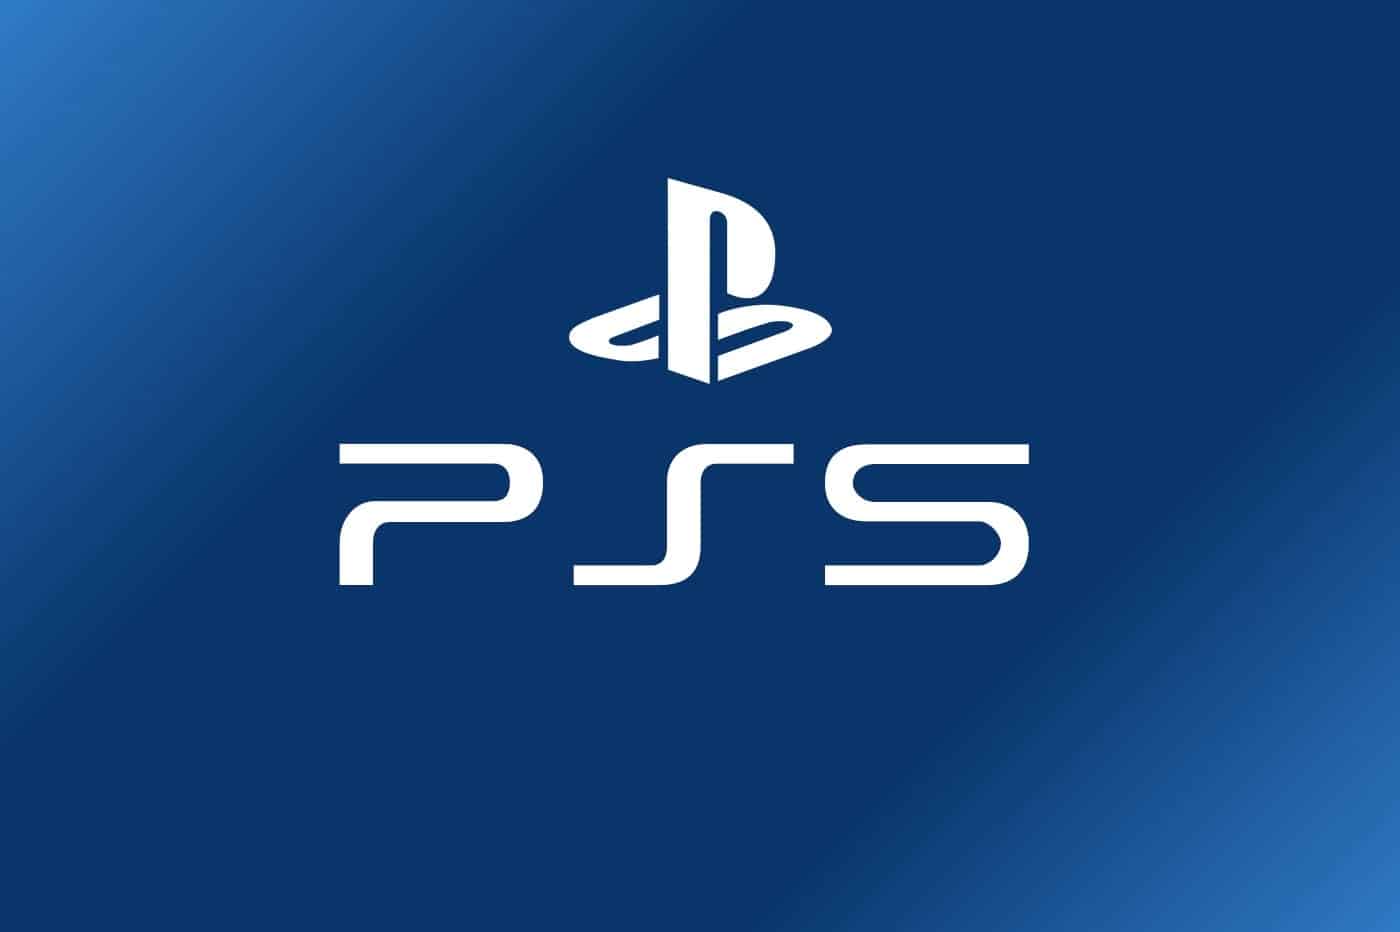 Jokalarien PlayStation 5 Zein dira haien itxaropenak?
